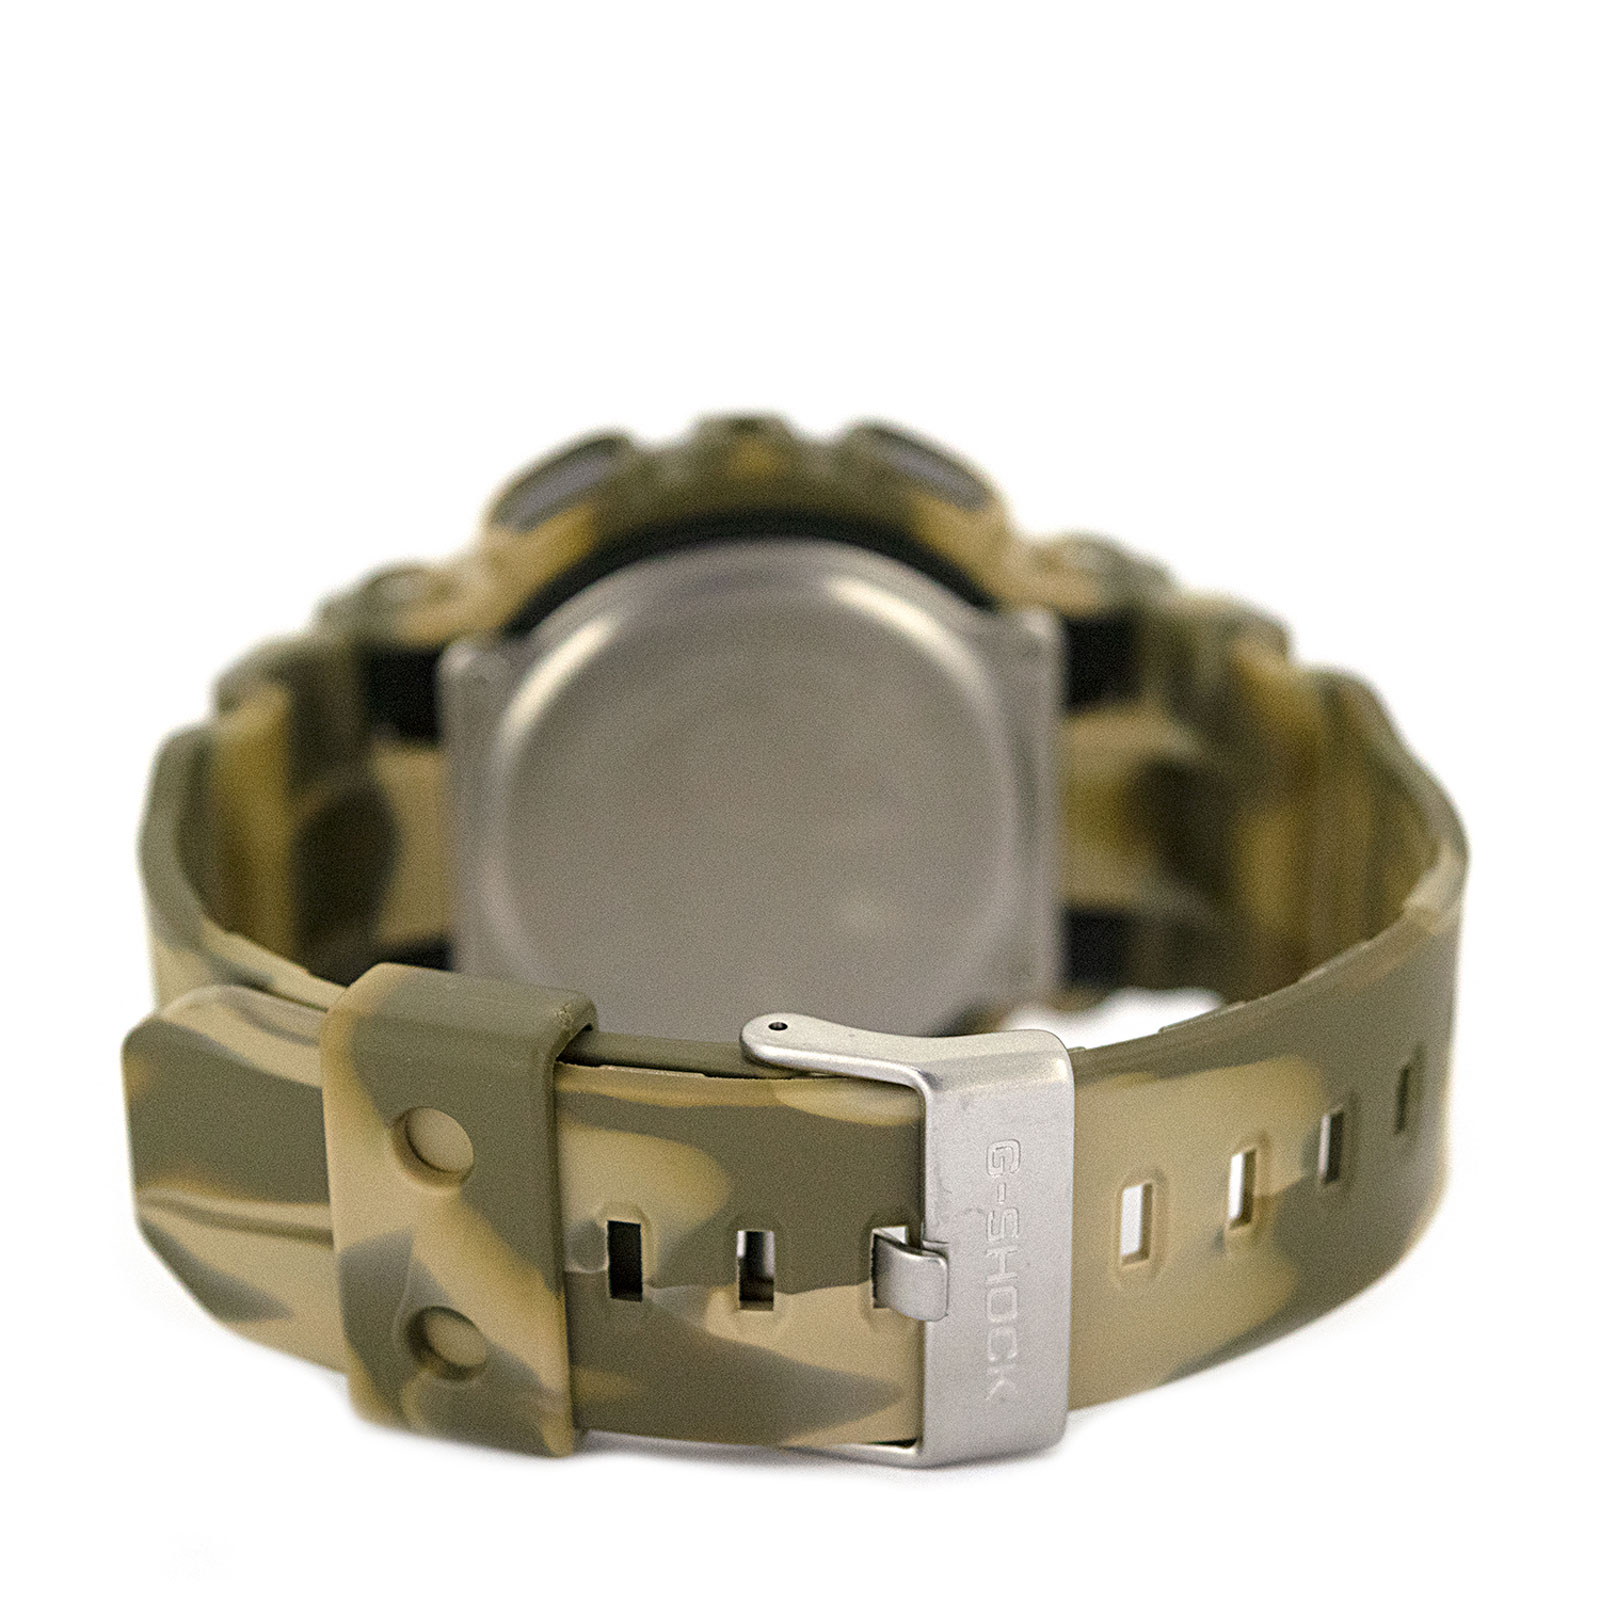 SALE】カシオ Gショック マーブル カモフラ GA-100MM メンズ 腕時計 